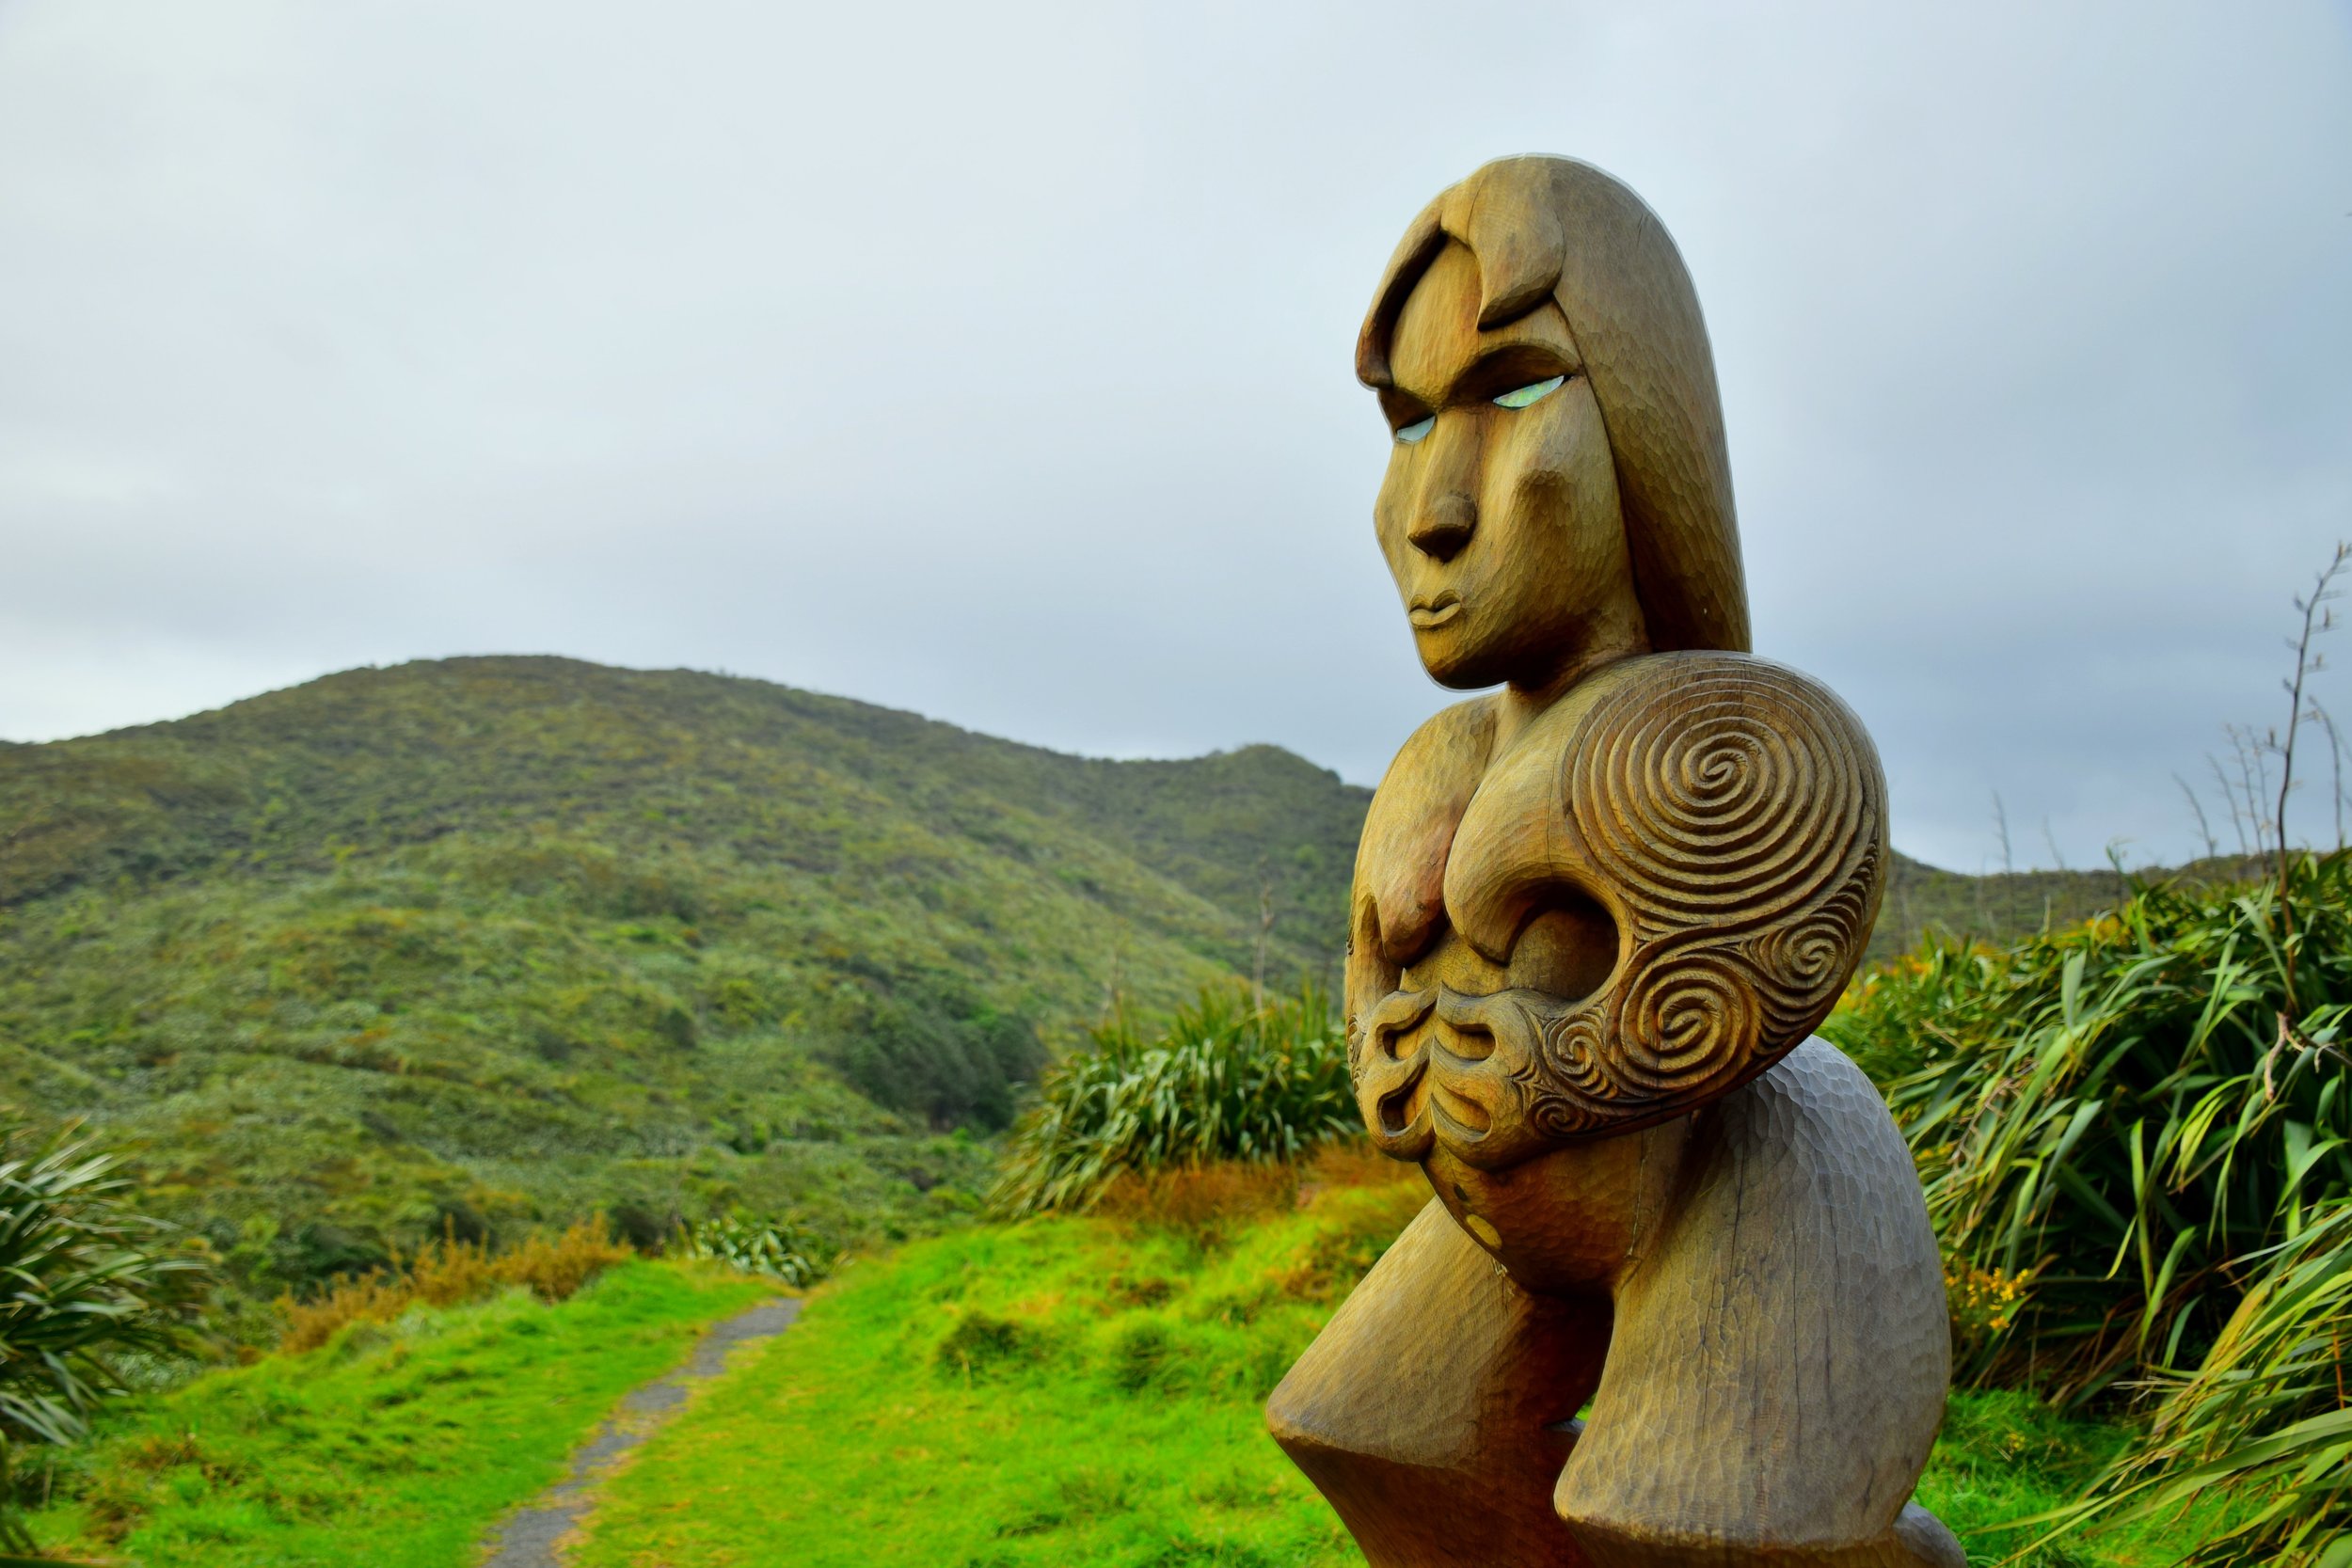 MJerrard-MaoriCulture-unsplash.jpg